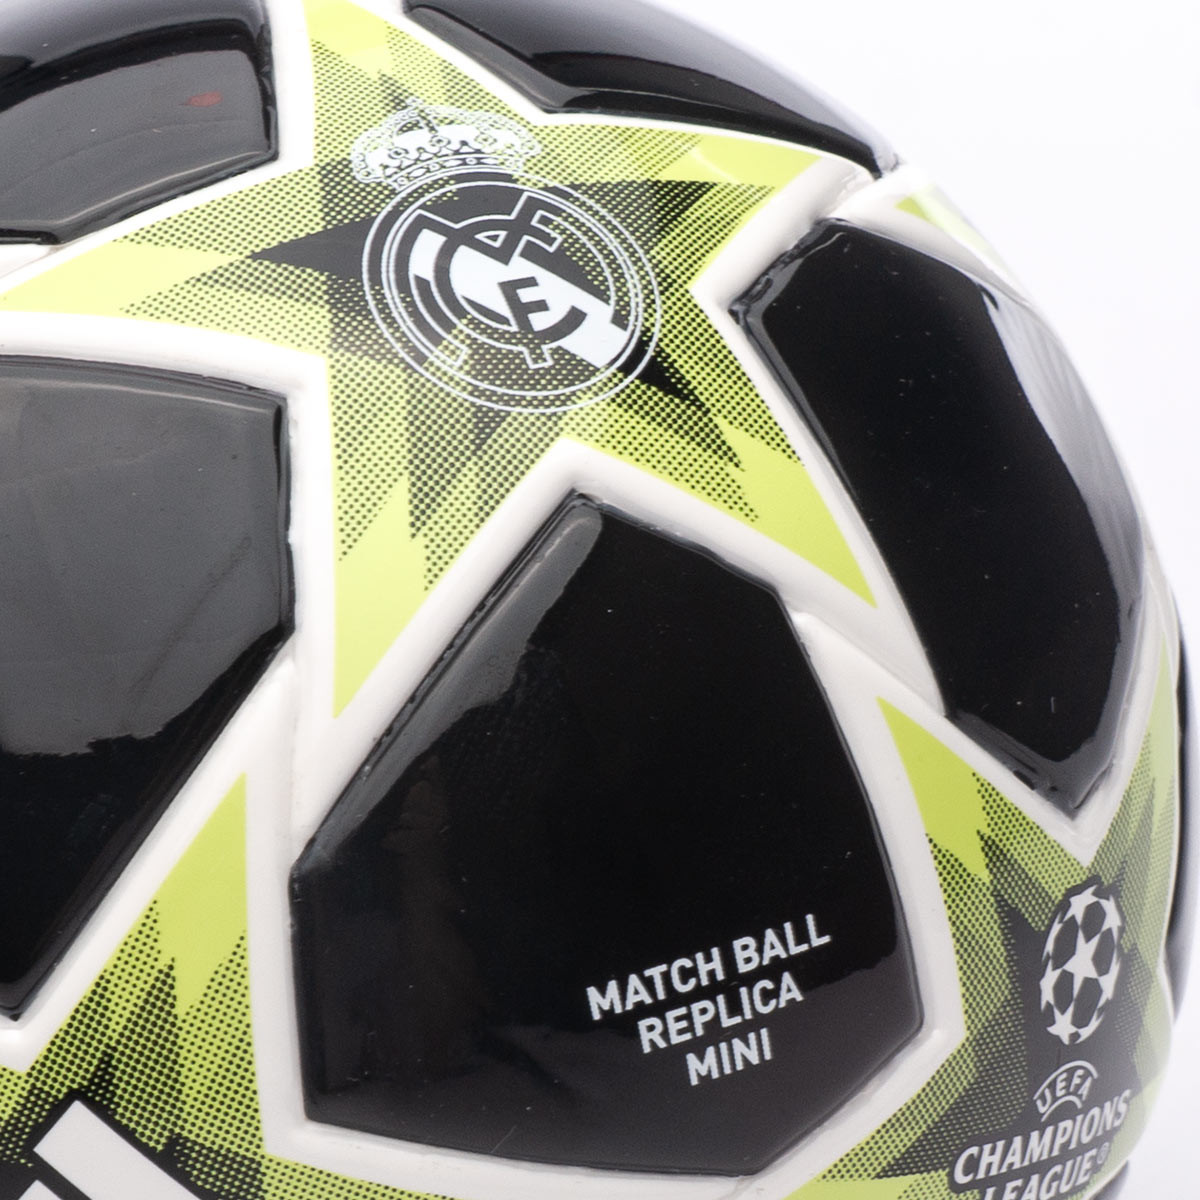 adidas Ballon De Football Club Extérieur Real Madrid Noir